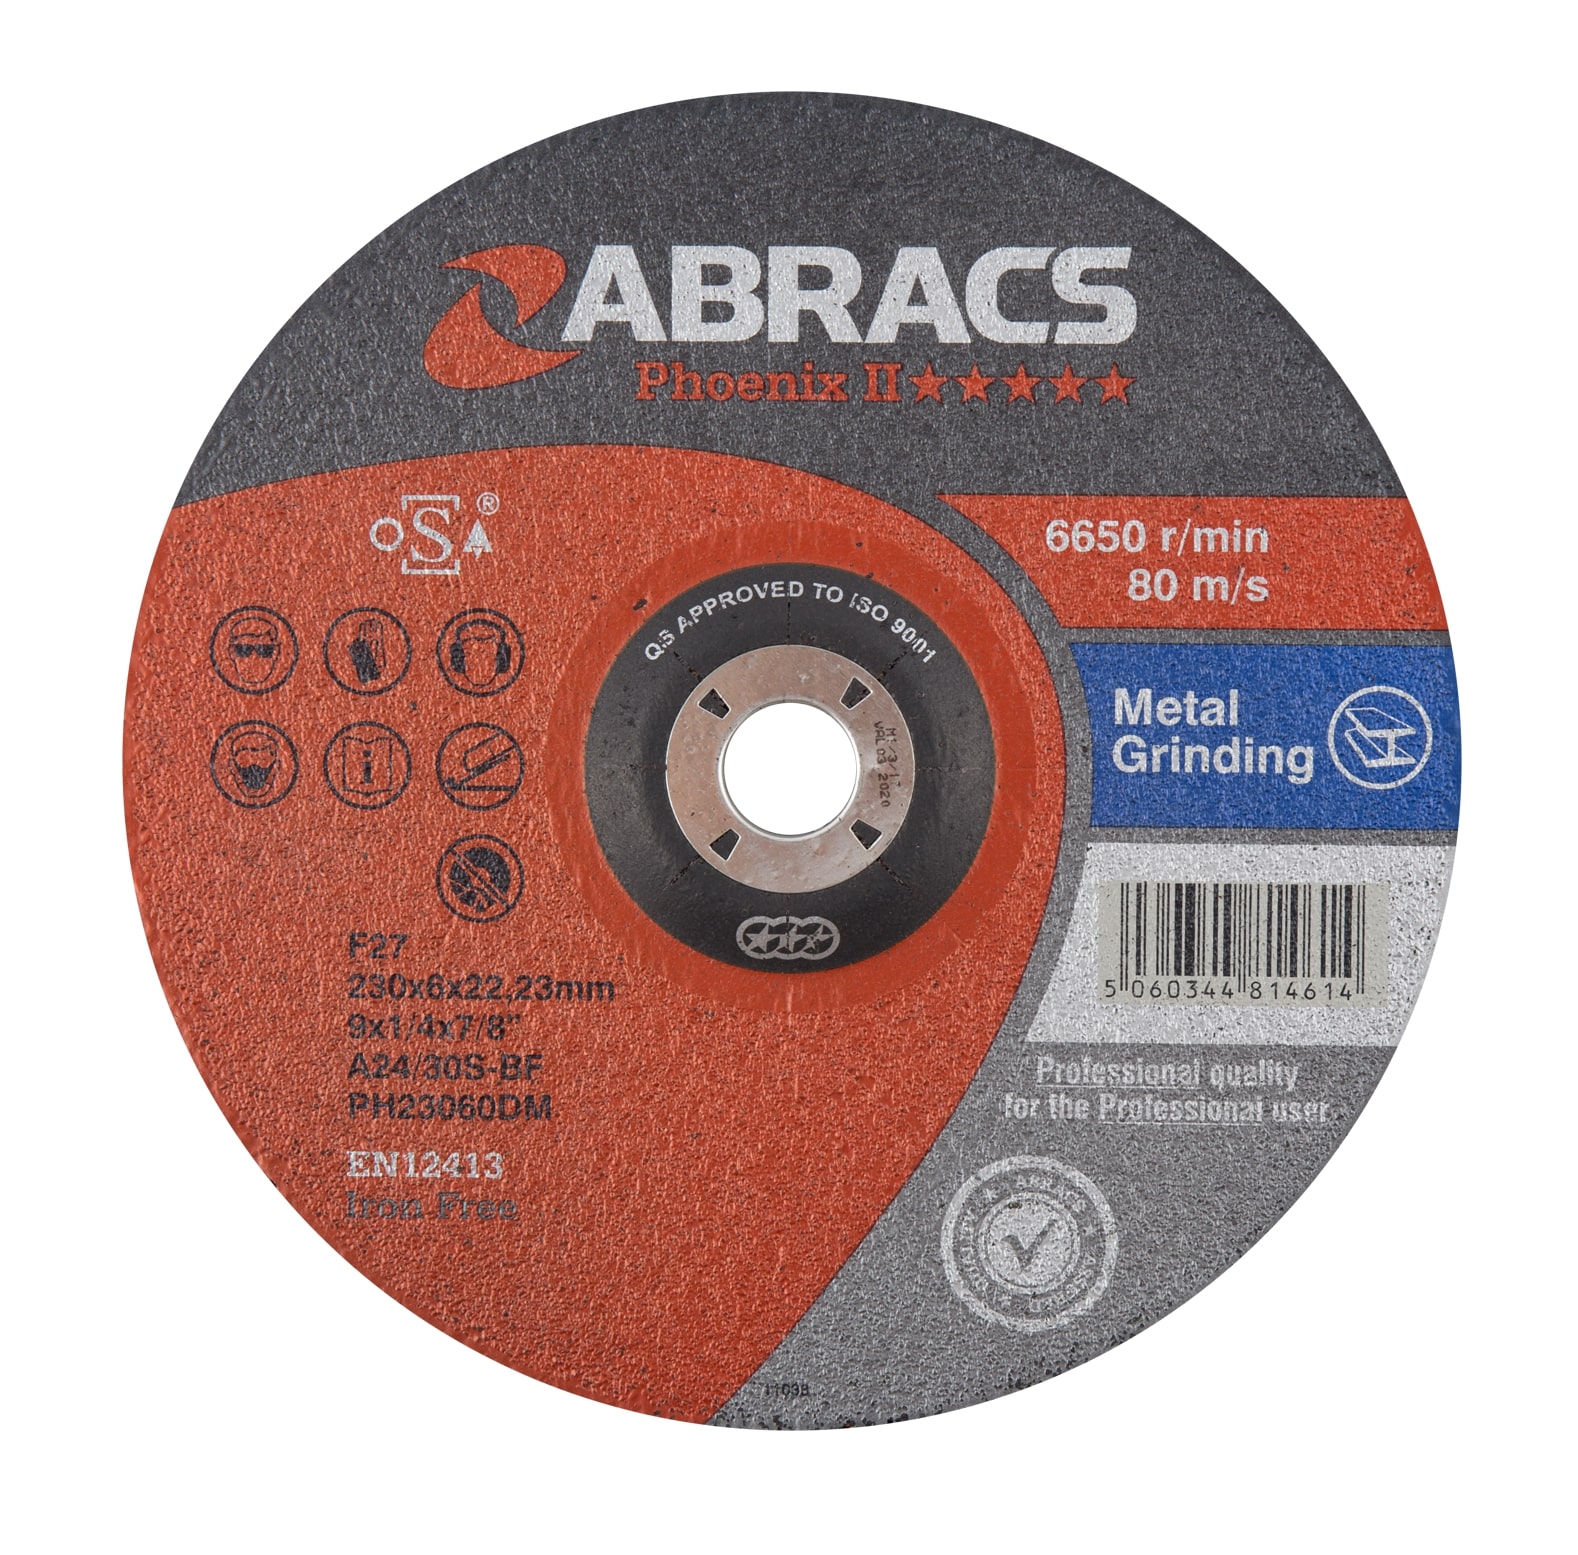 Abracs  PHOENIX II 230mm x 6mm x 22mm DPC METAL Grinding Disc